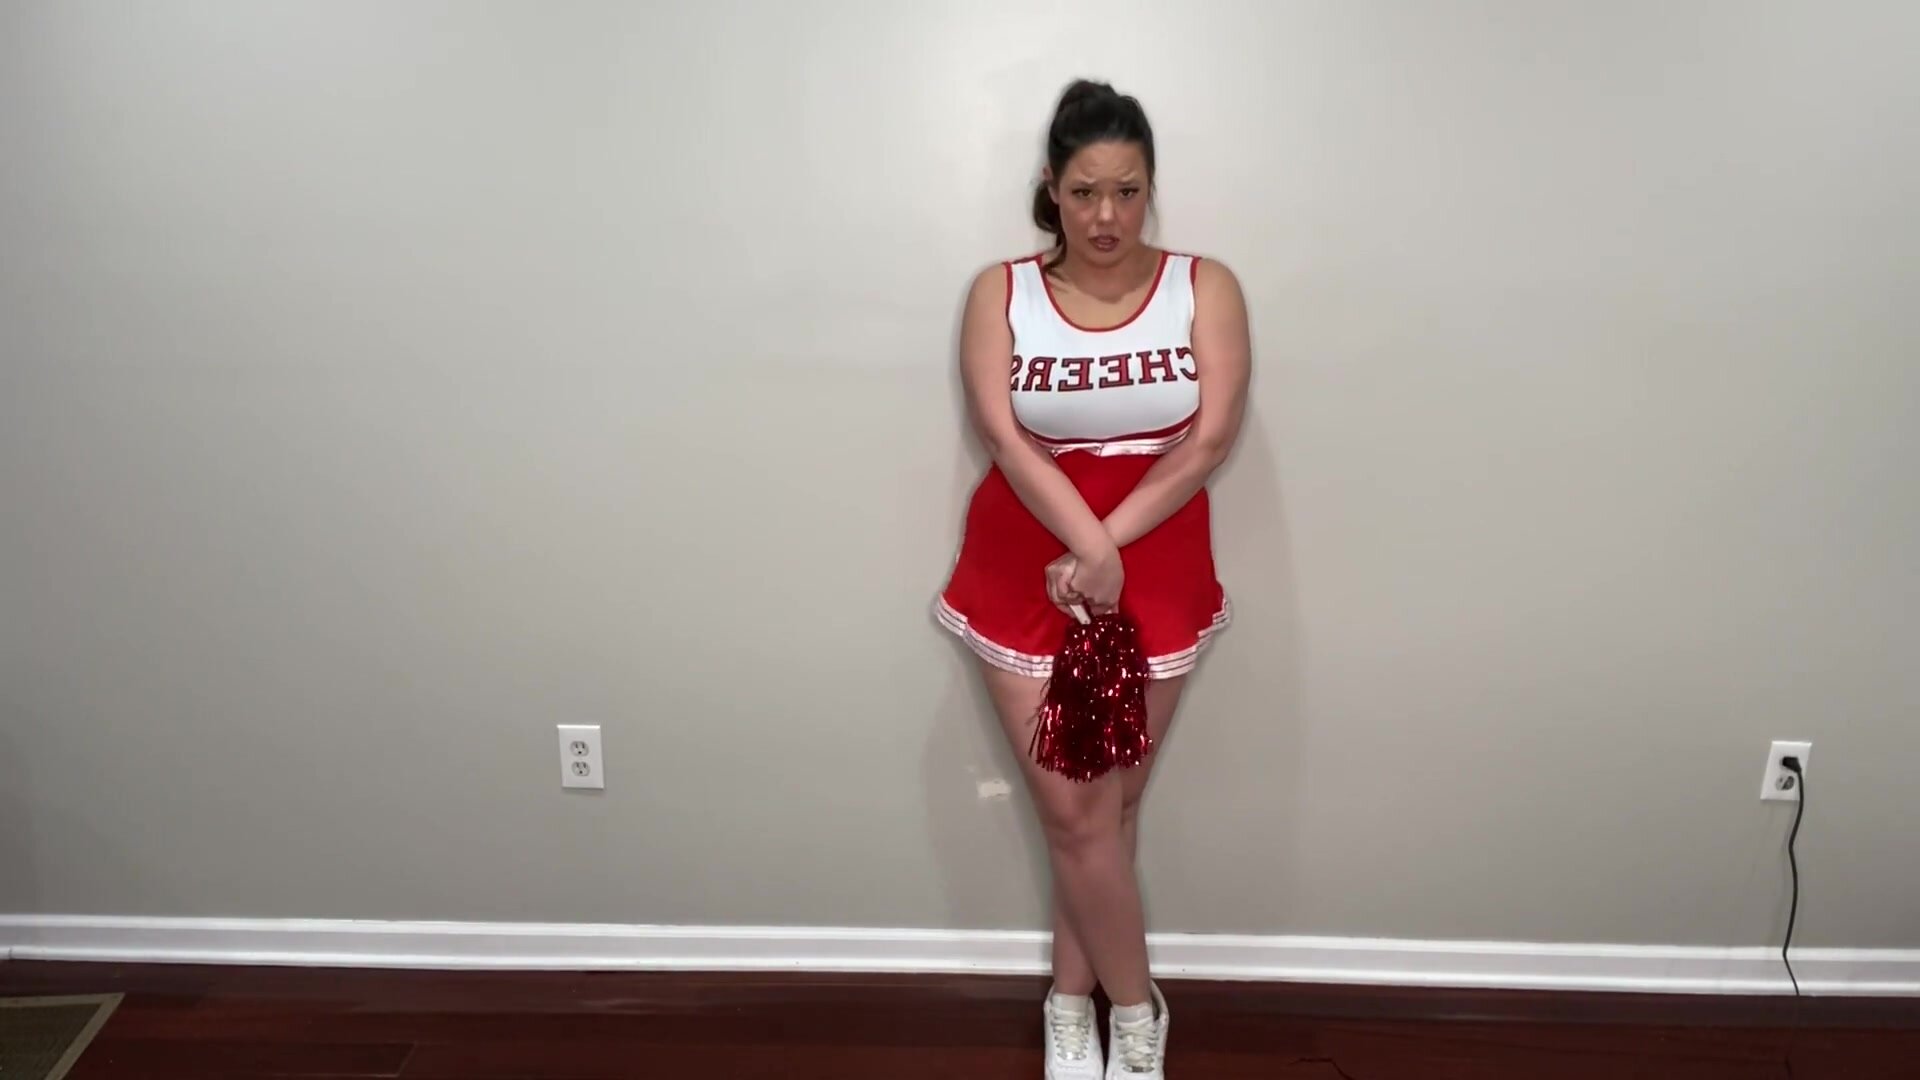 Hot Cheerleader Upskirts Peeing - Cheerleader has to pee - ThisVid.com